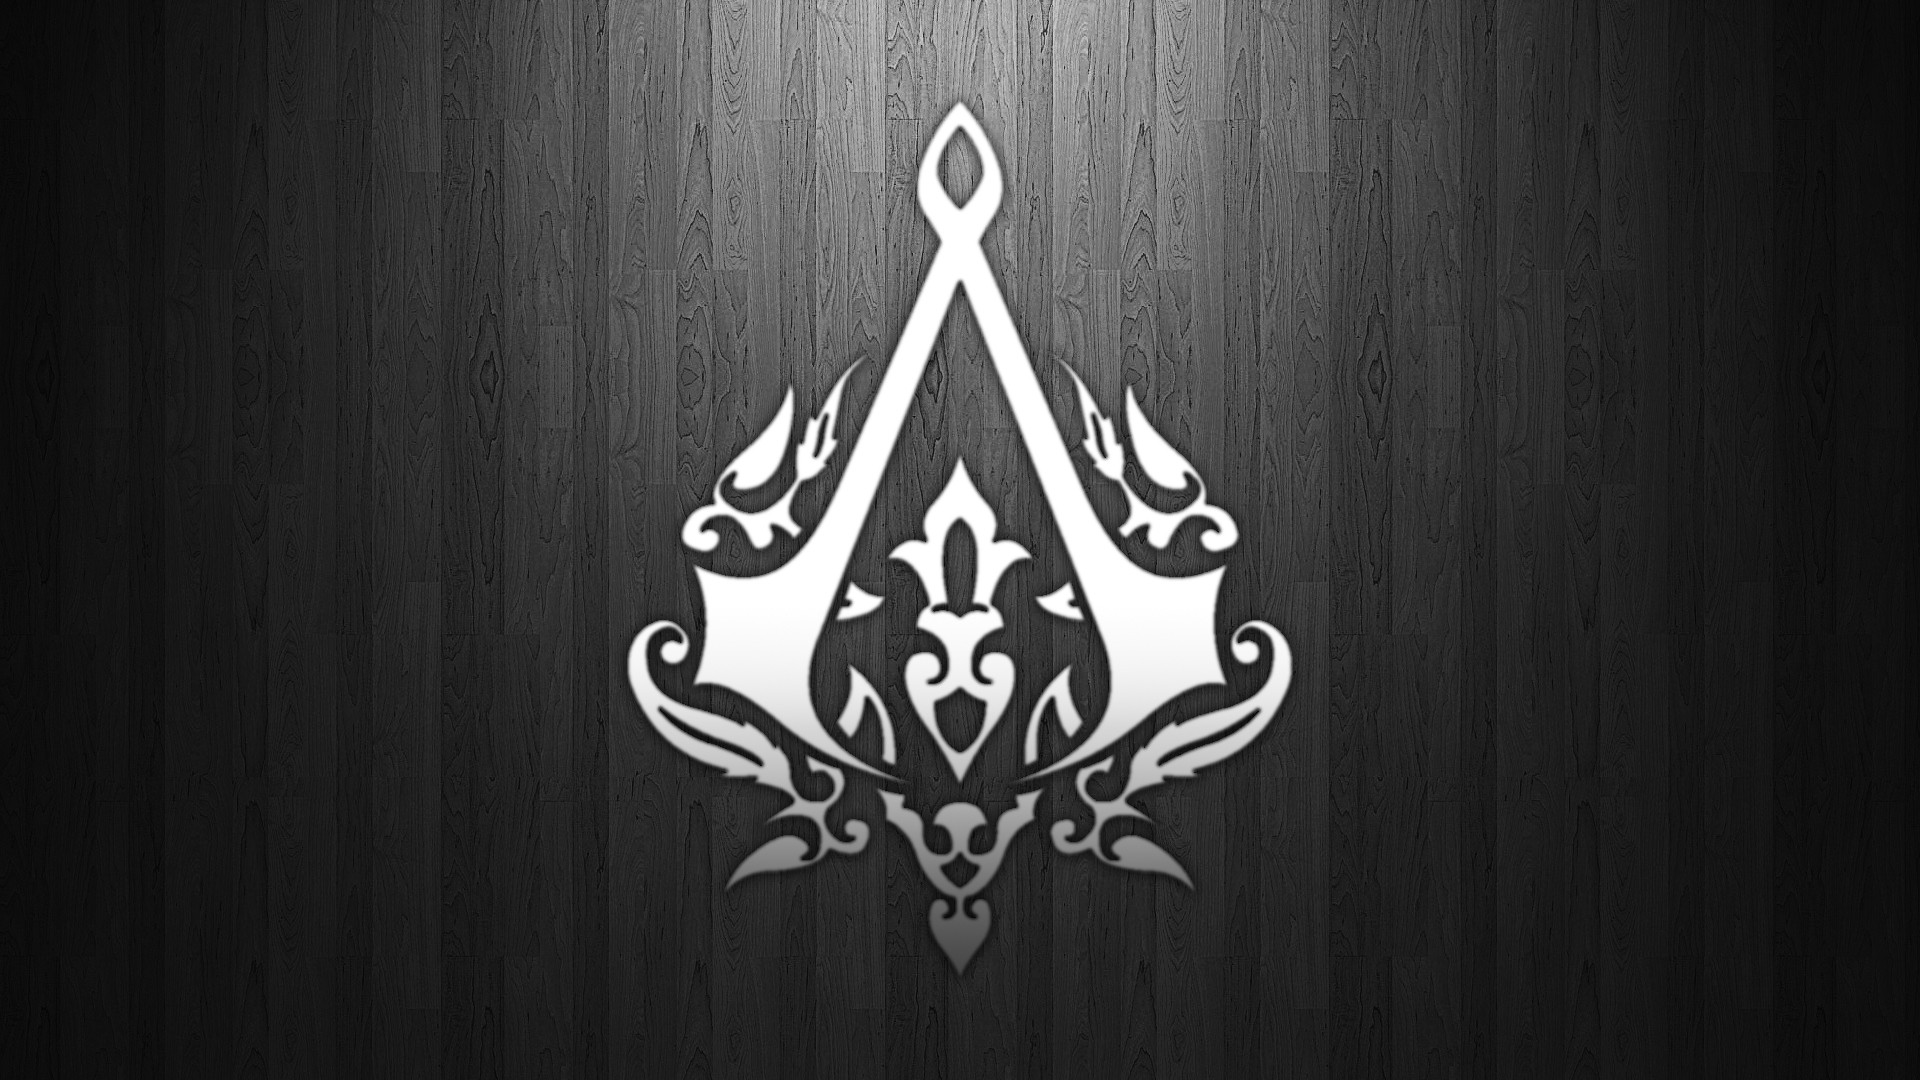 Assassins Creed HD Wallpaper On